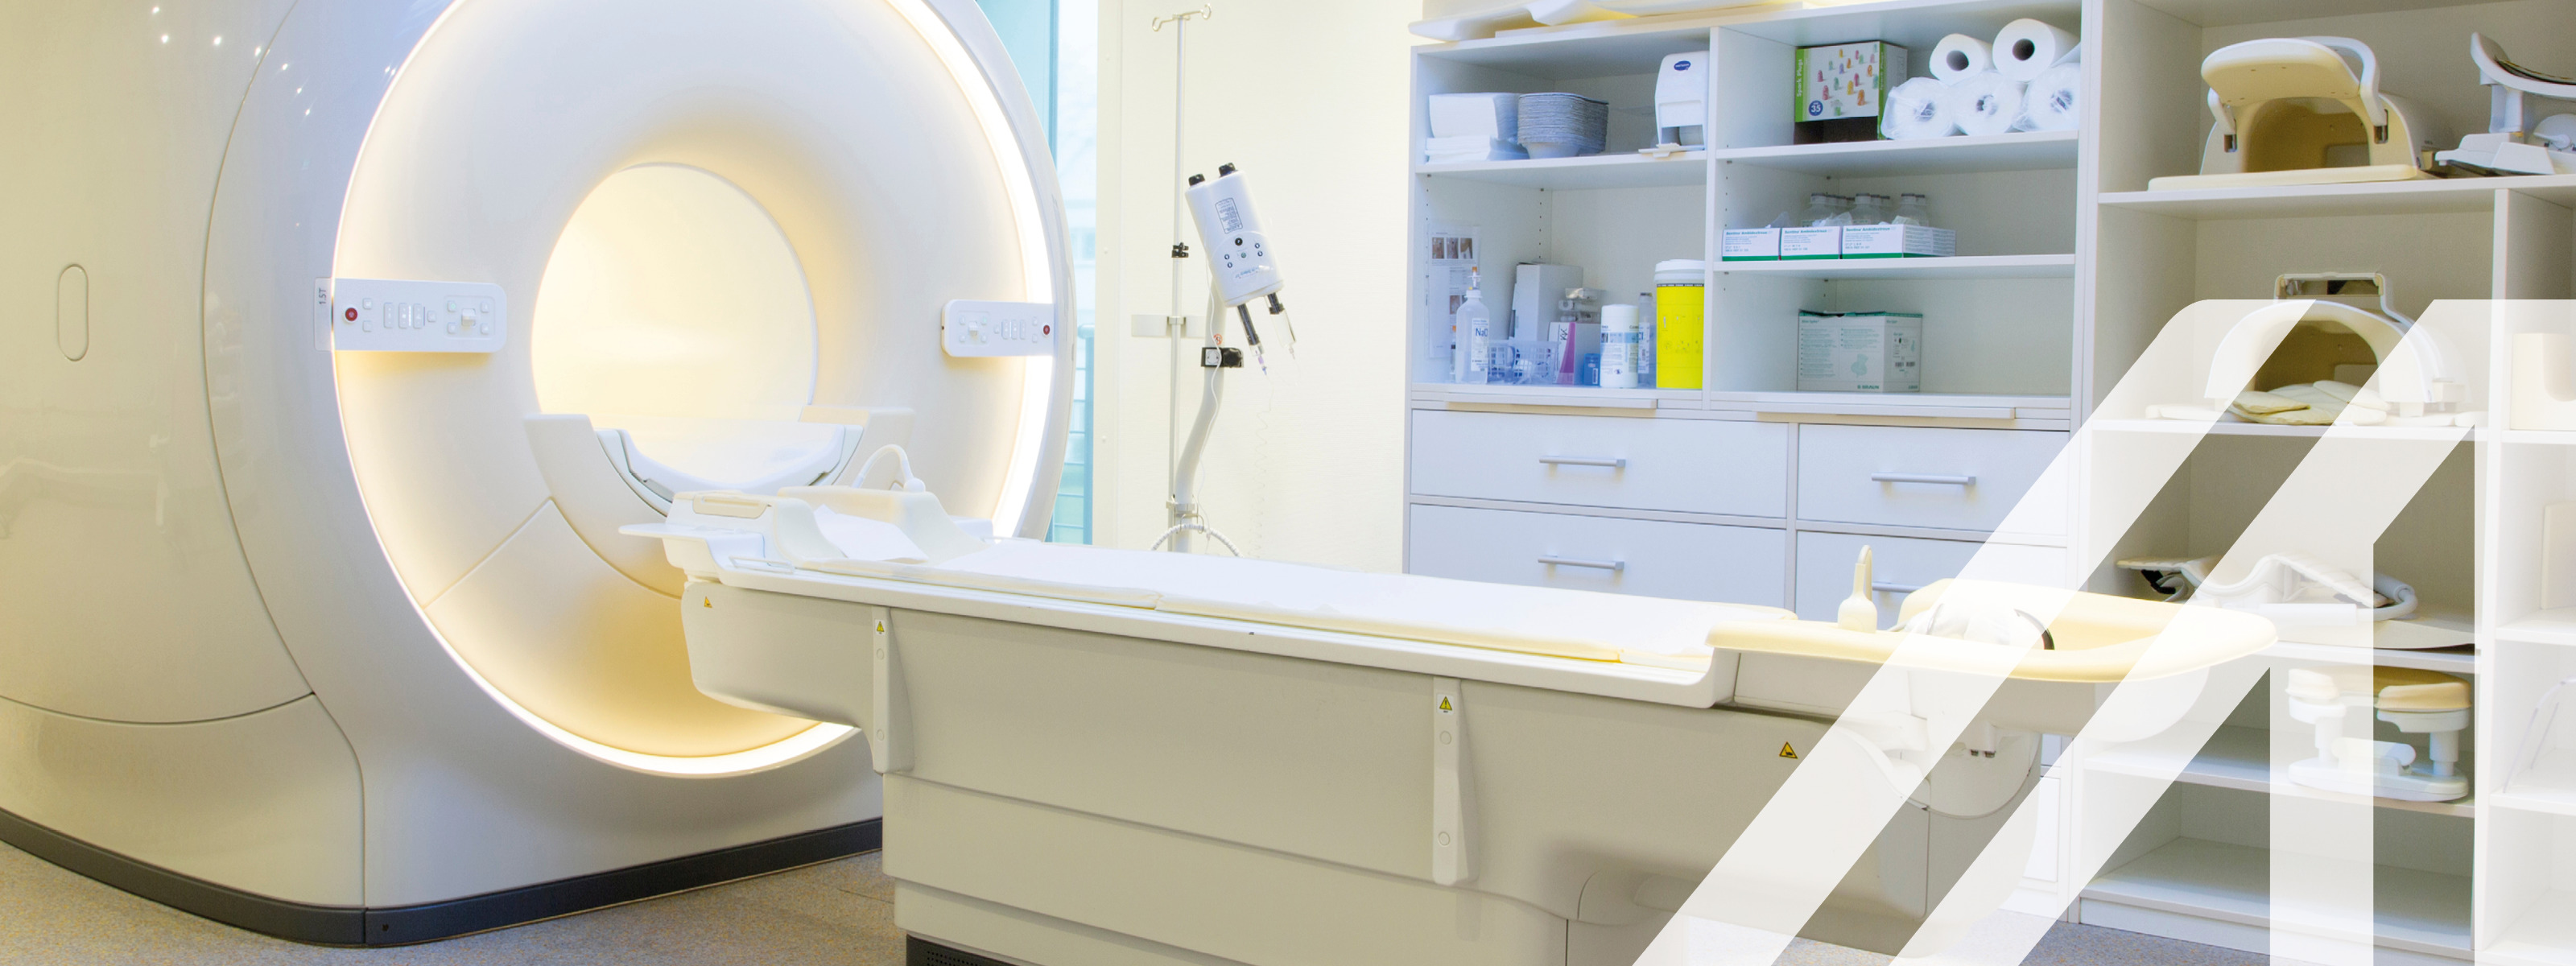 Kernspintomograph in einem Krankenhaus / Klinik / Praxis